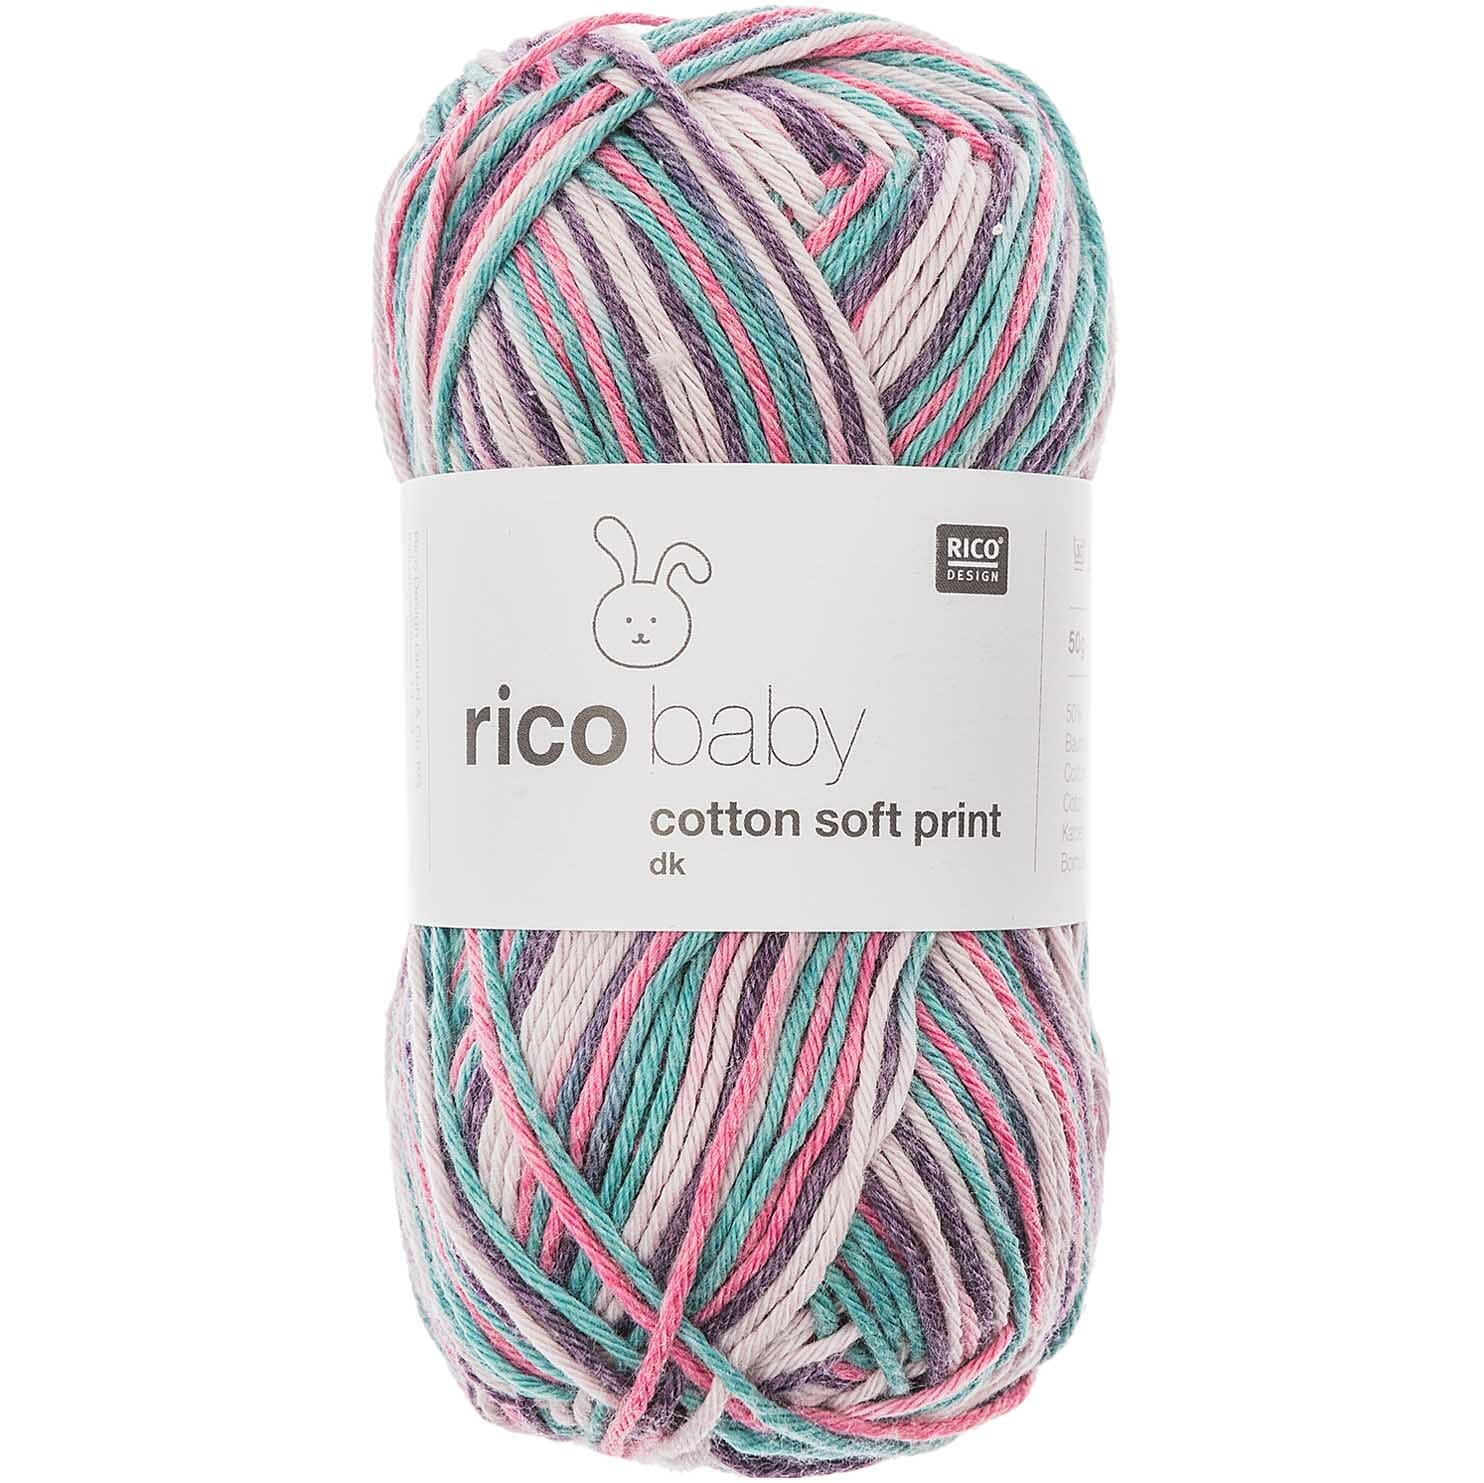 Rico Baby Cotton Soft Print dk 50g – 50%